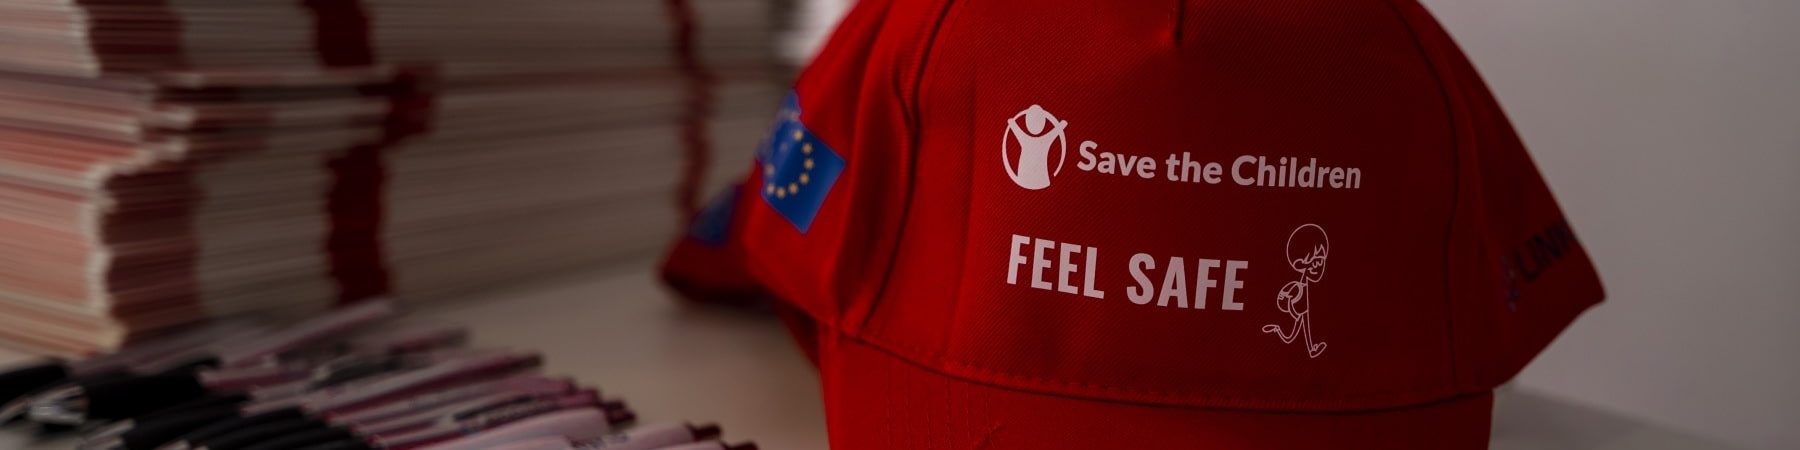 cappellino iniziativa feel safe piattaforma save the children 